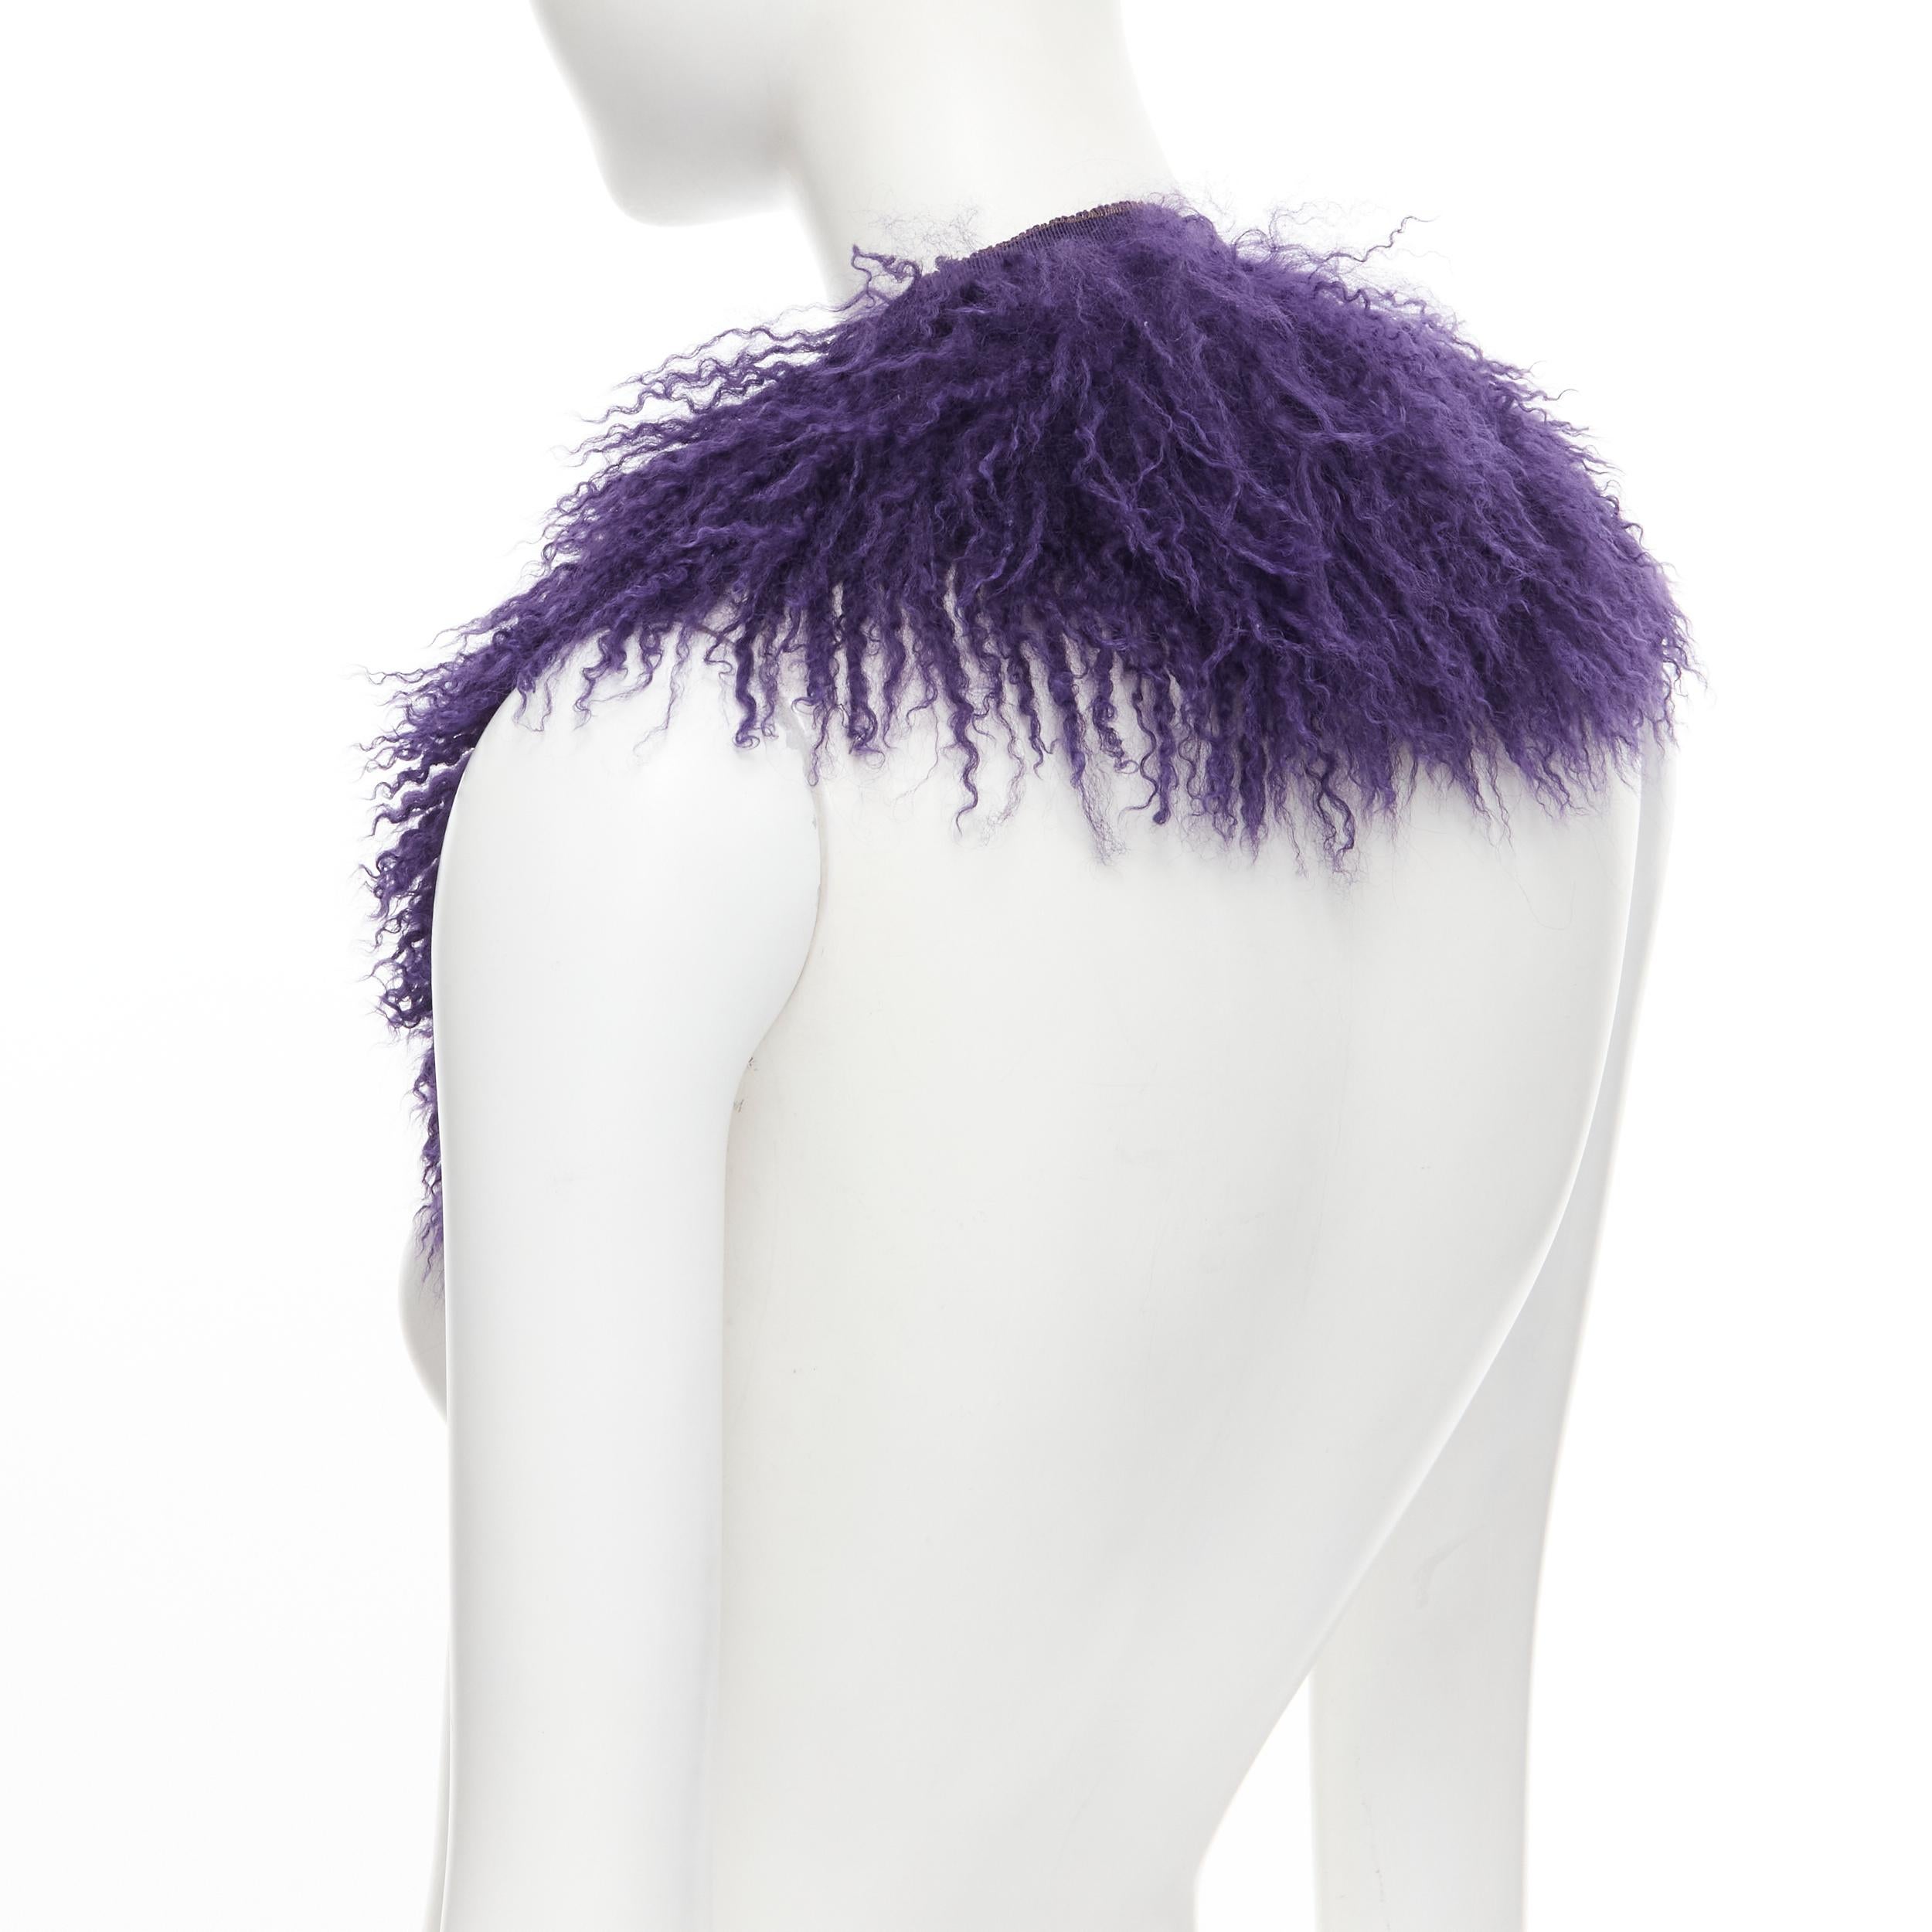 Gray MIU MIU purple dye shaggy curly sheep shearling fur tie neck collar